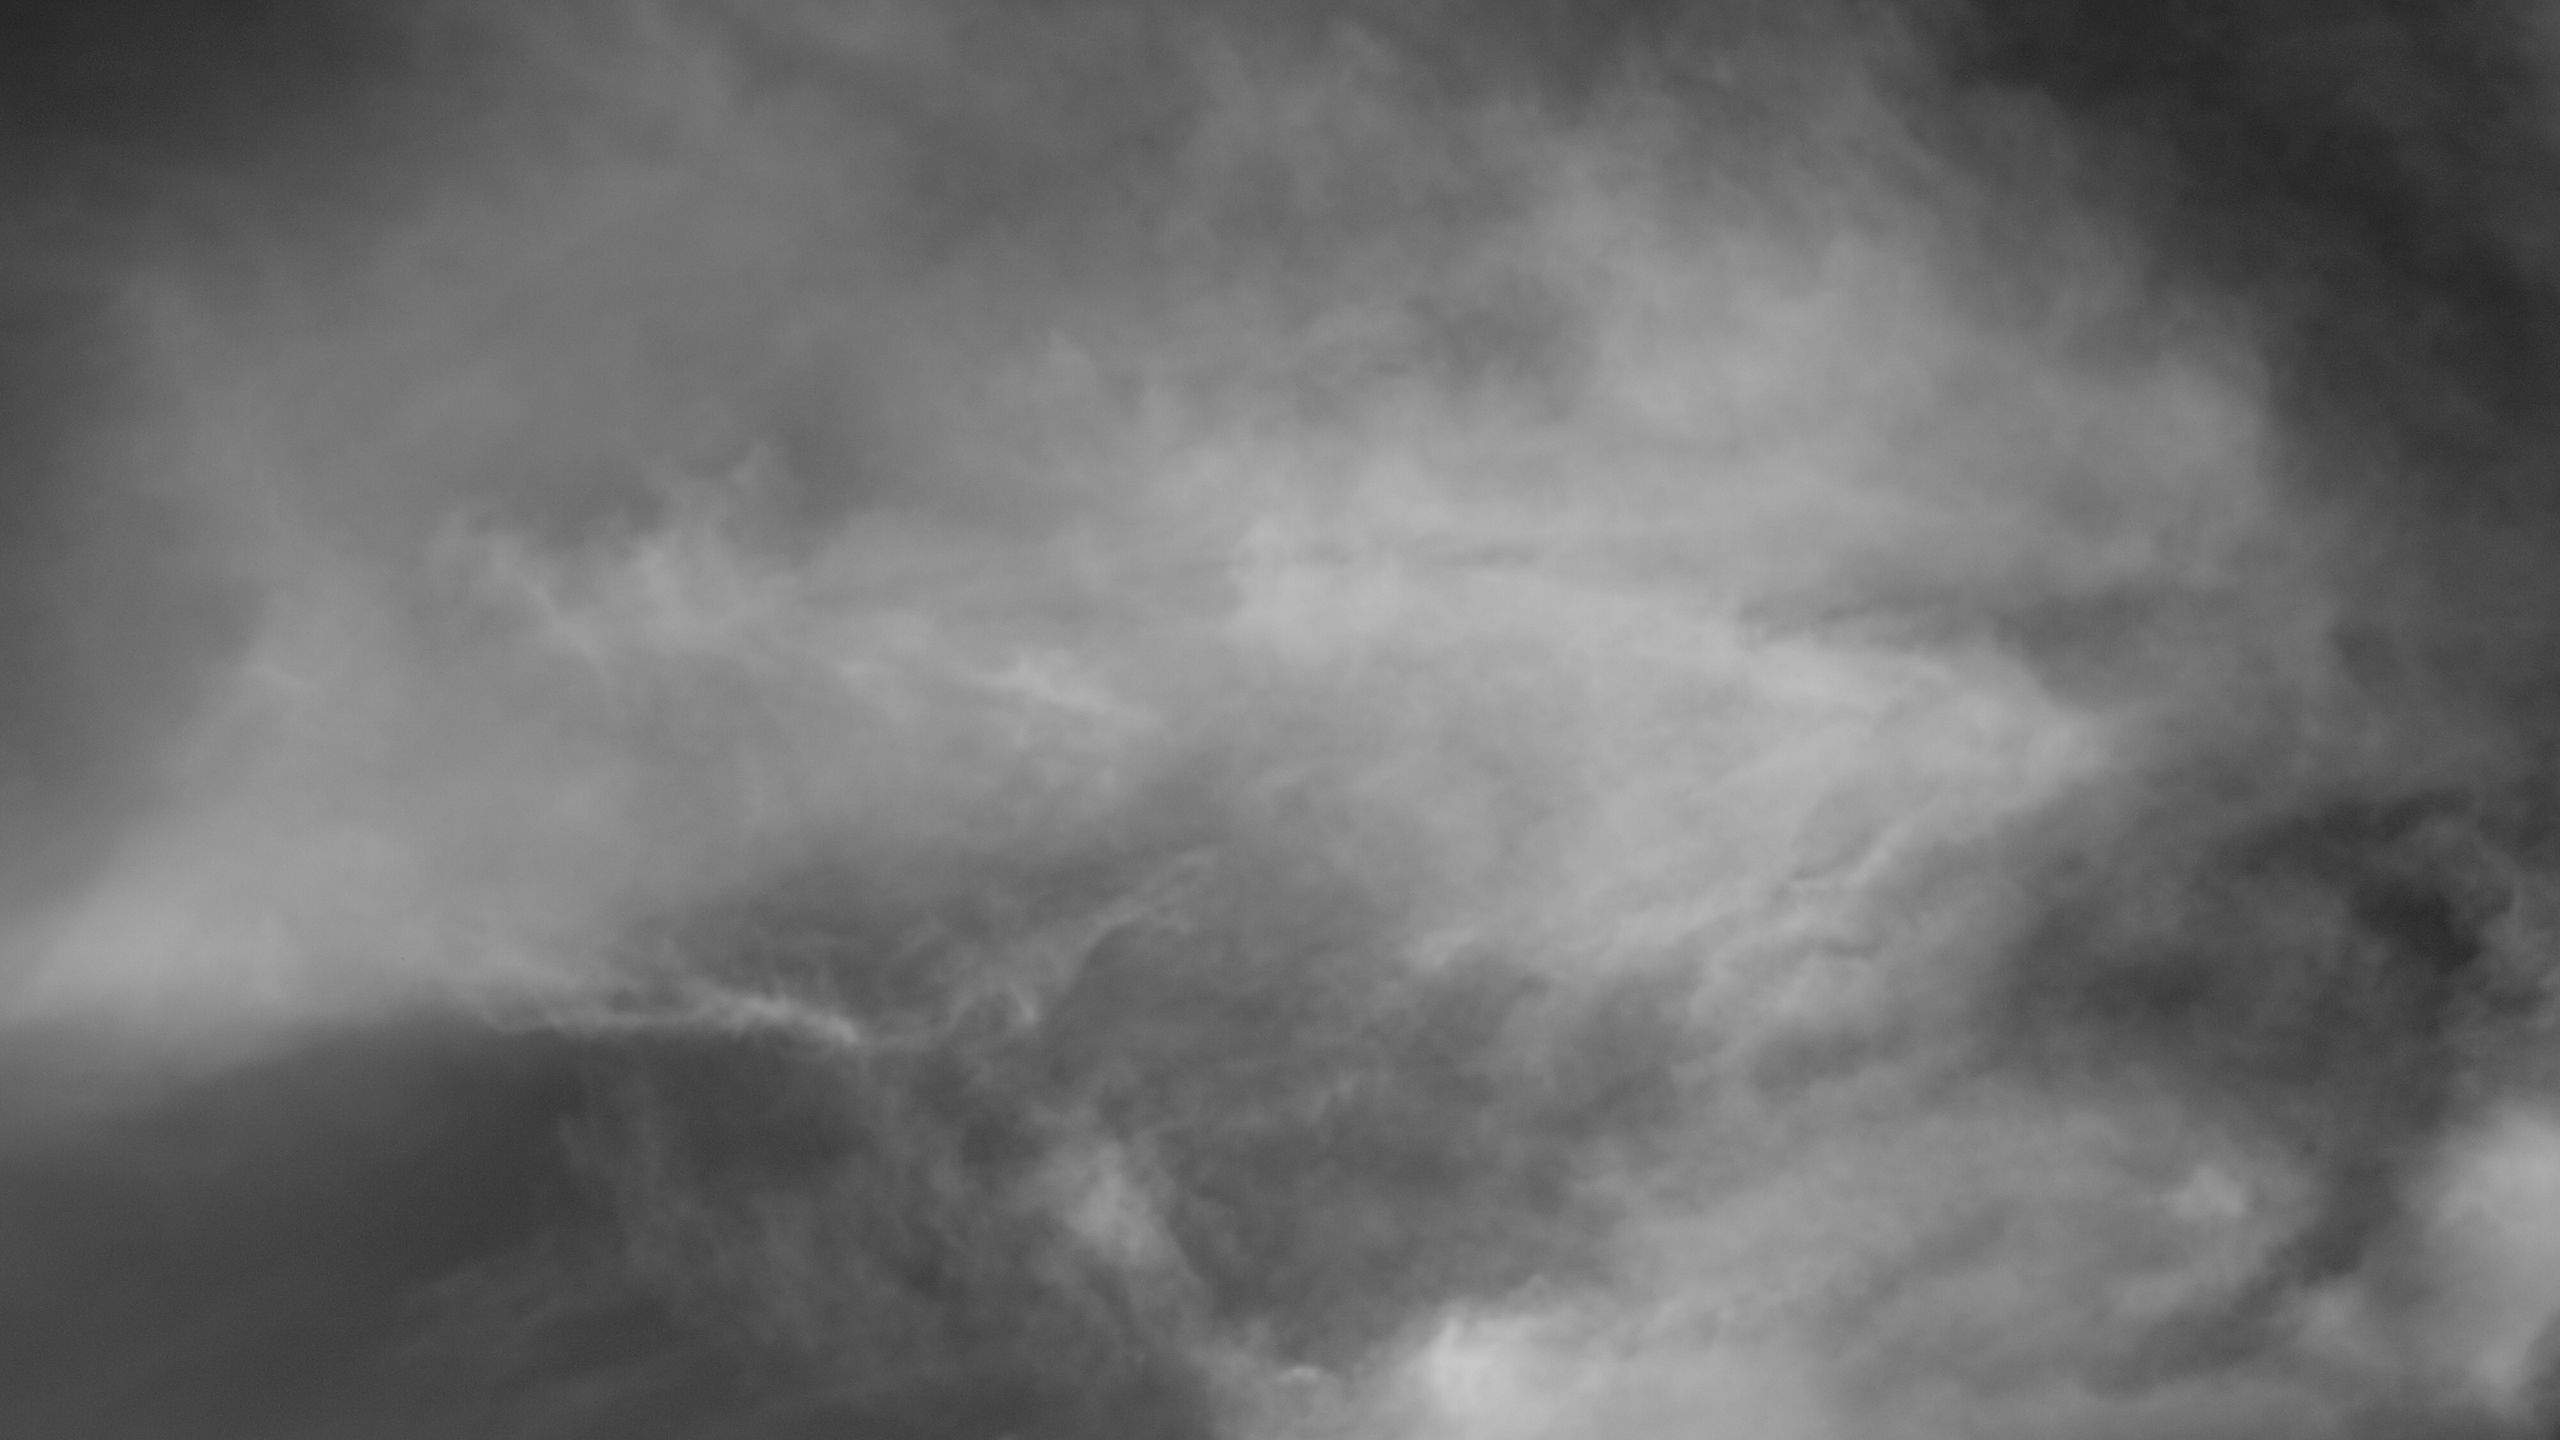 511993 Grey Cloud Background Images Stock Photos  Vectors  Shutterstock